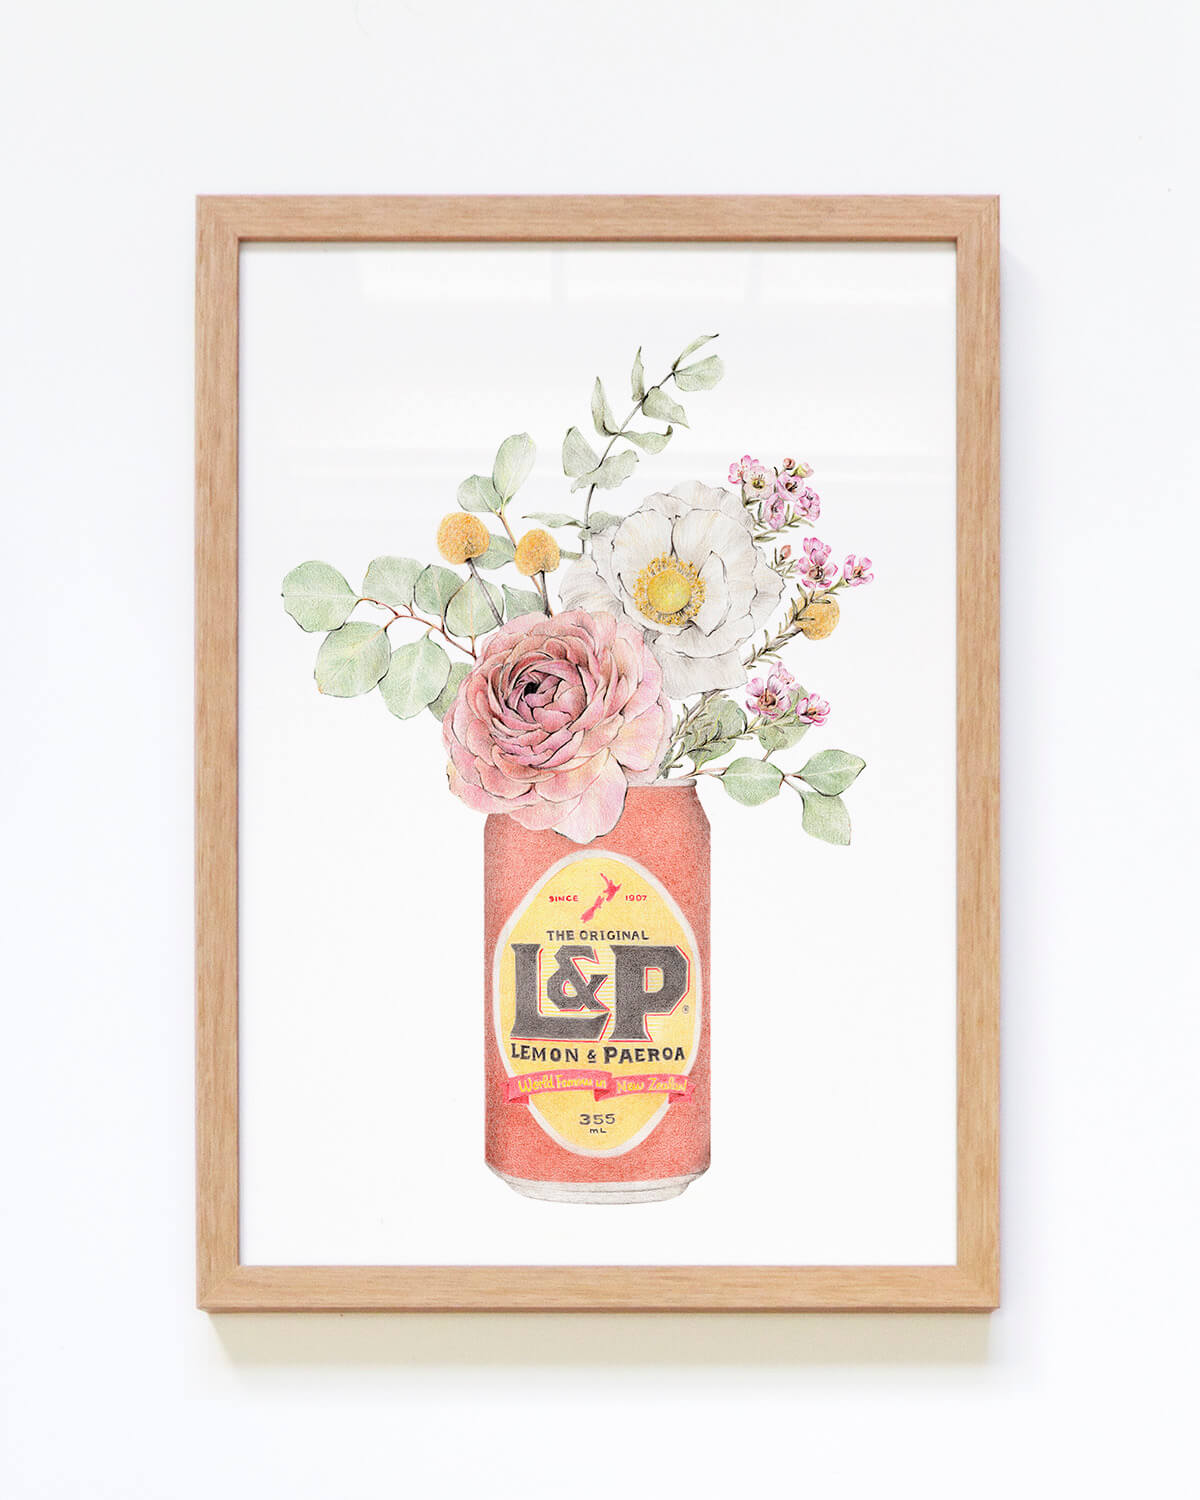 Classic New Zealand Soft Drink L&P Artwork by Carmen Hui